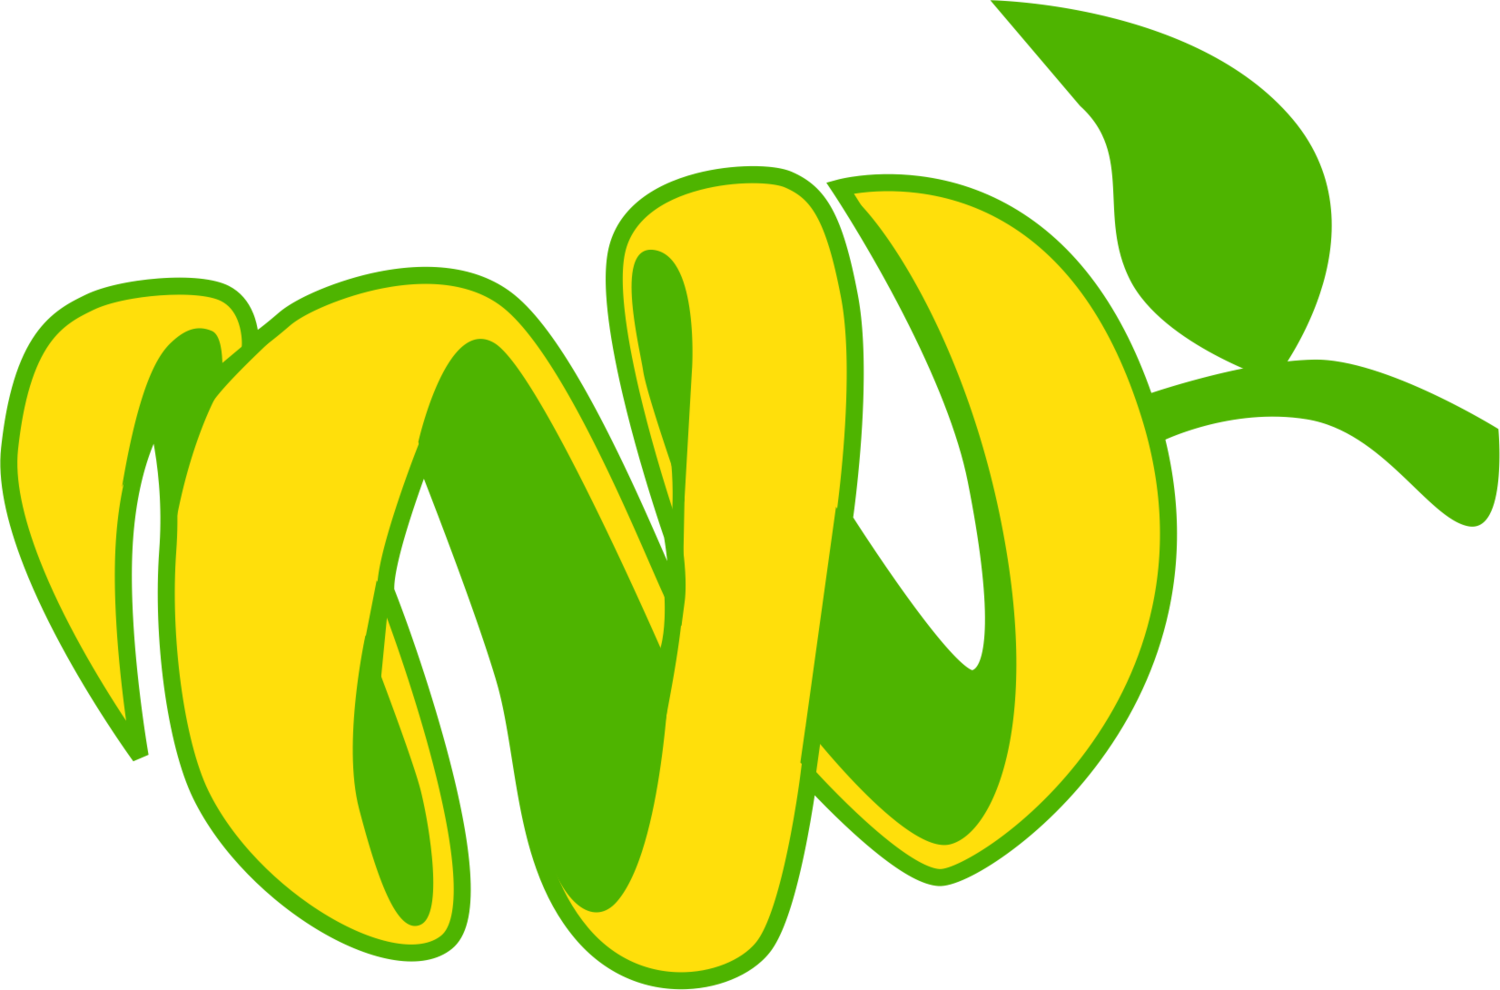 Logo fruits. Логотип фрукты. Логотип овощи фрукты. Эмблема овощи. Манго логотип.